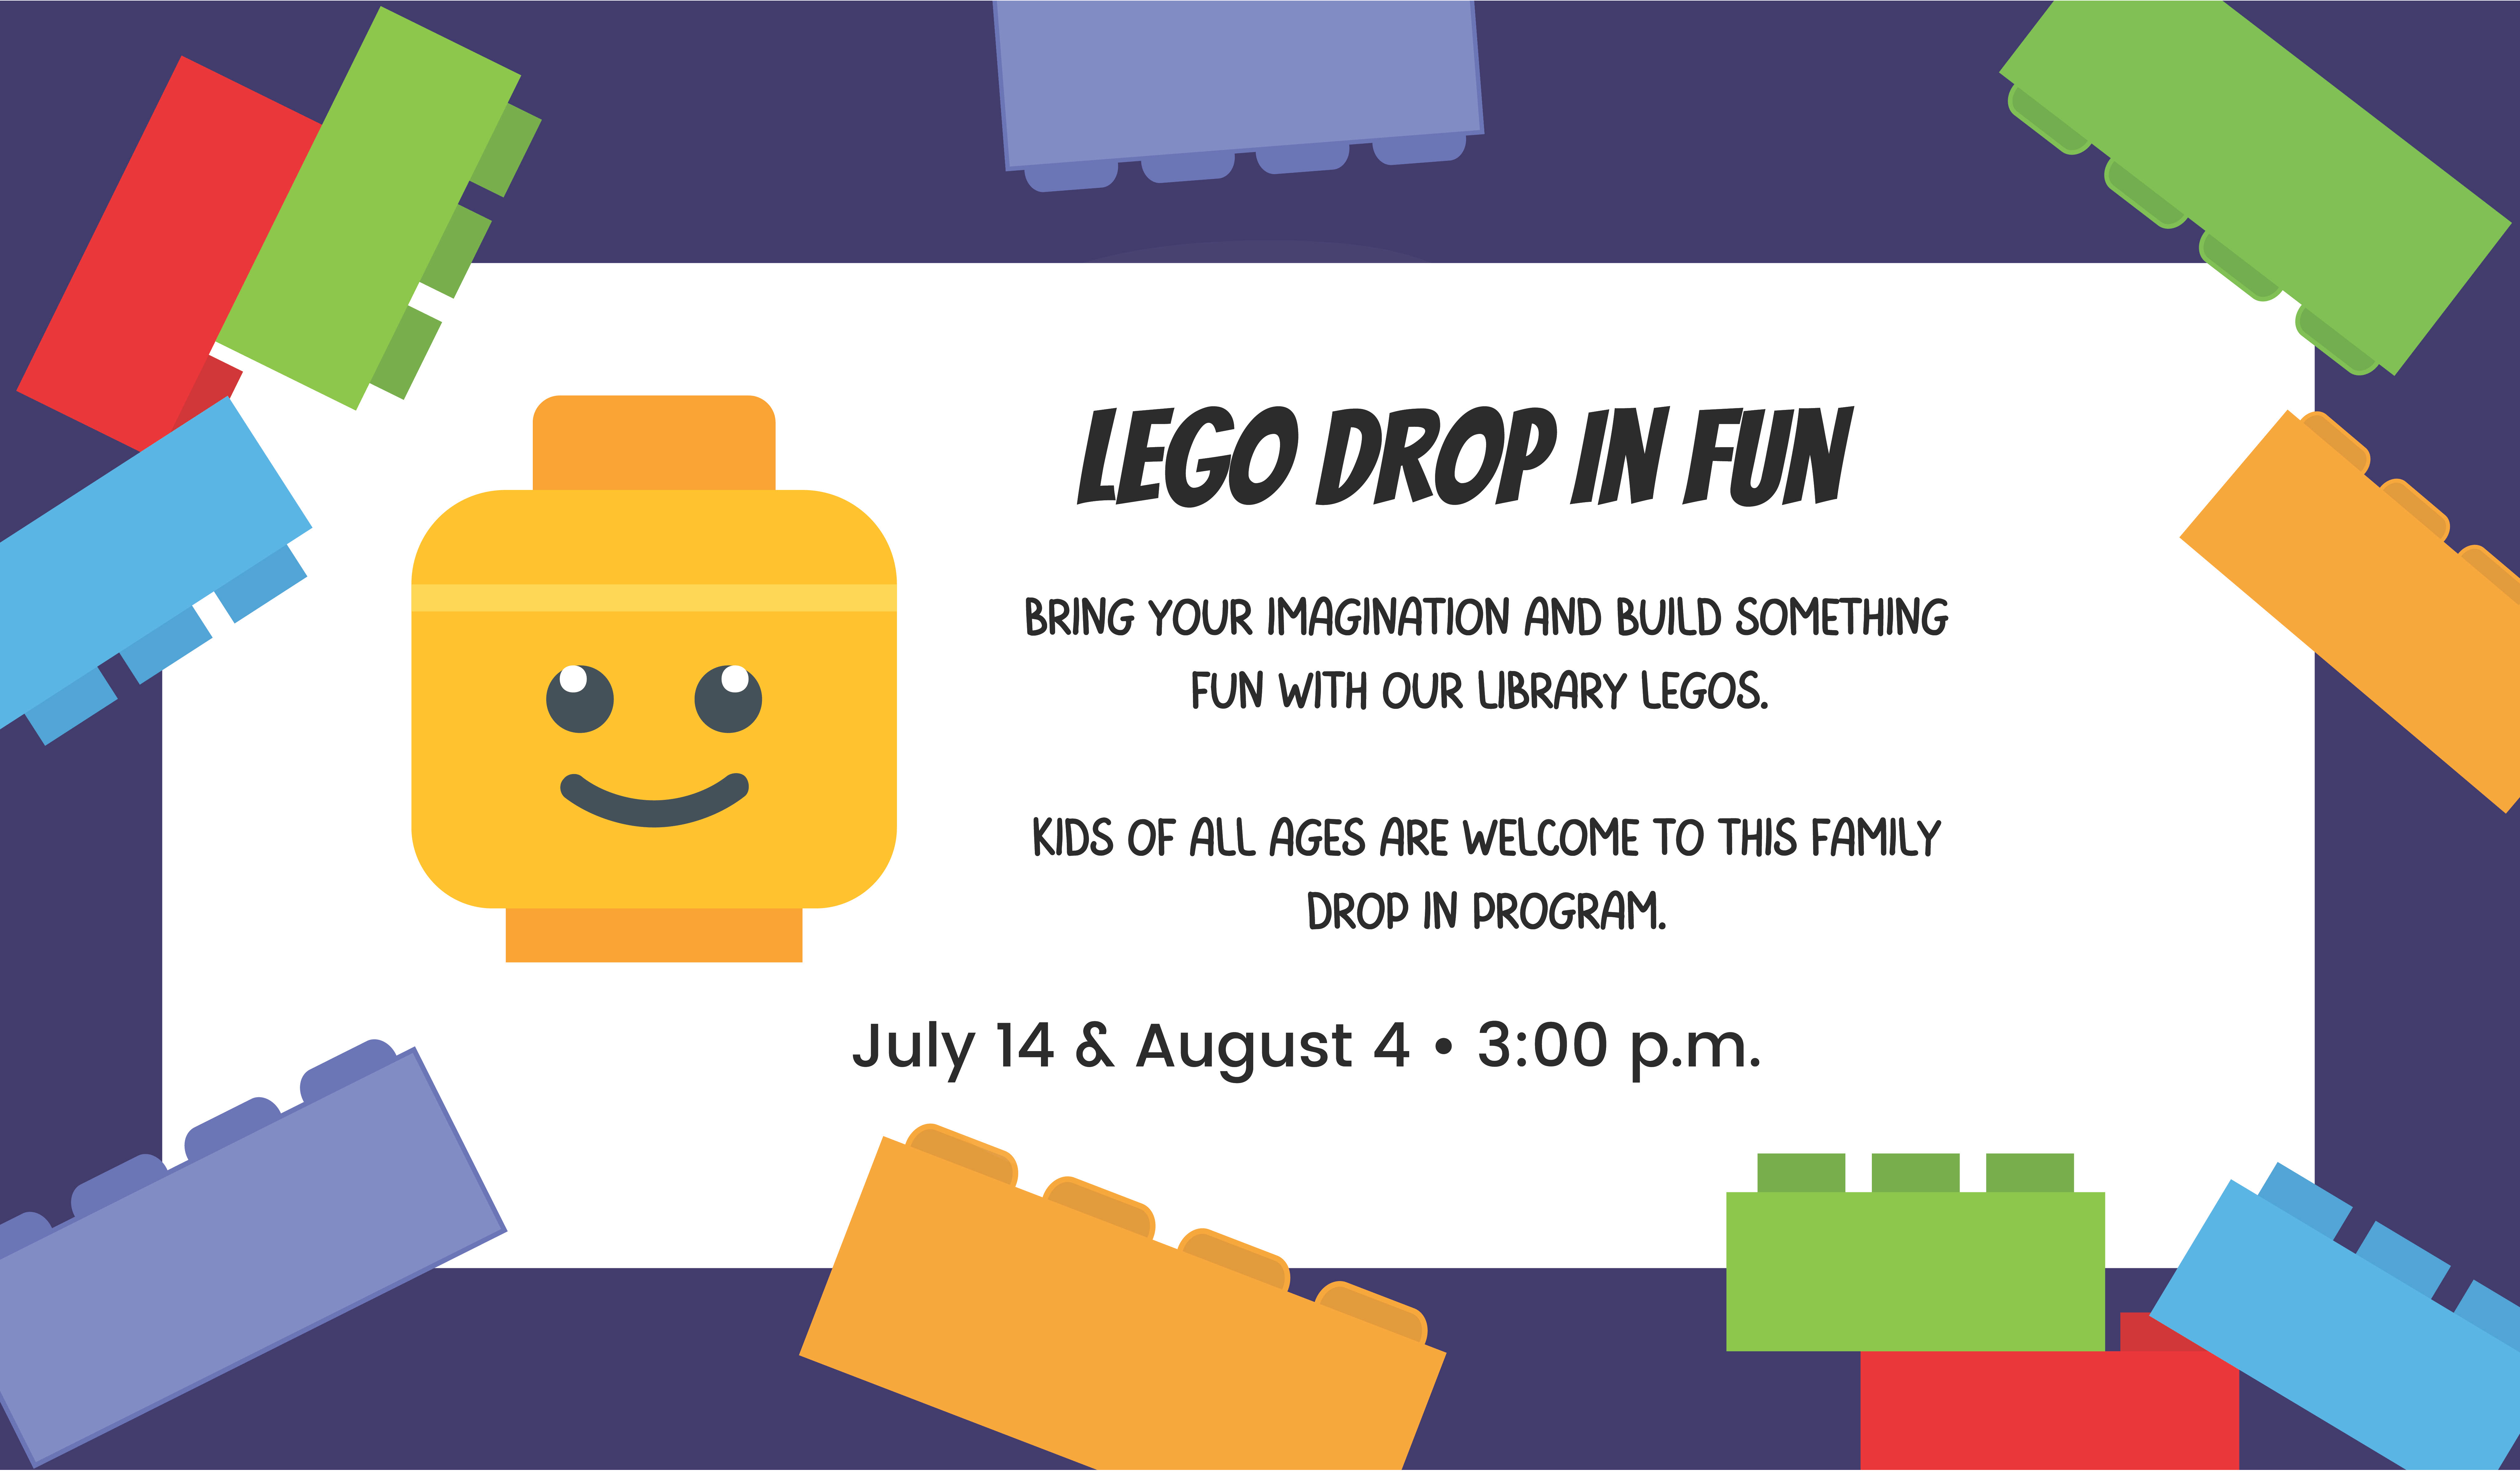 Lego Drop in Fun event